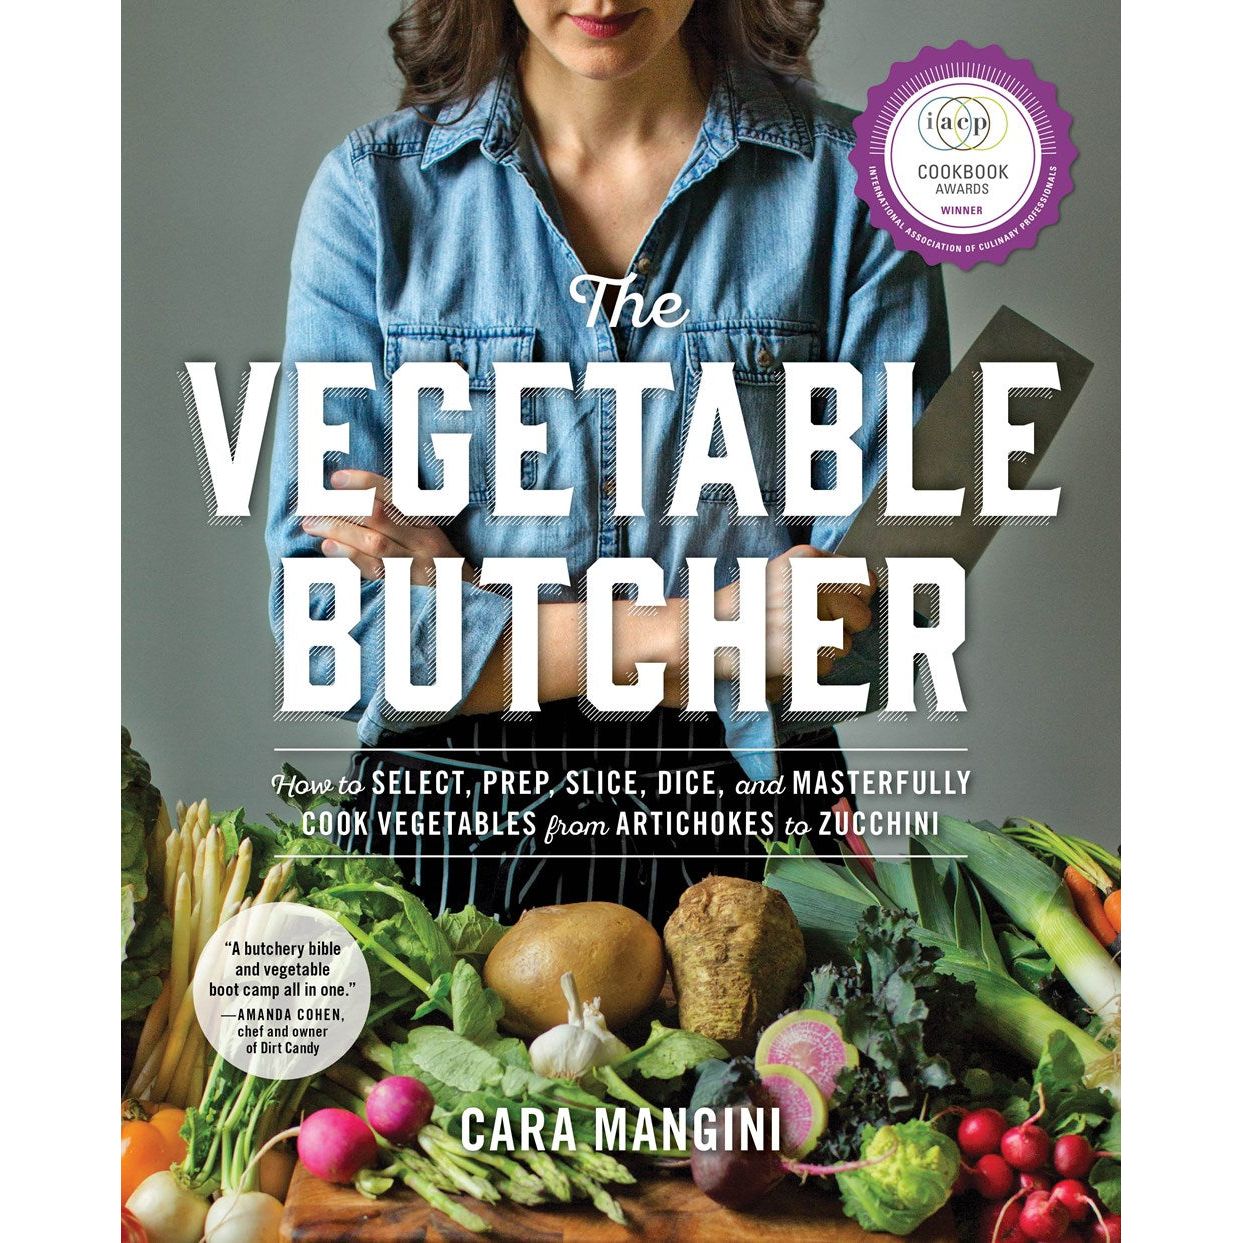 The Vegetable Butcher (Cara Mangini)